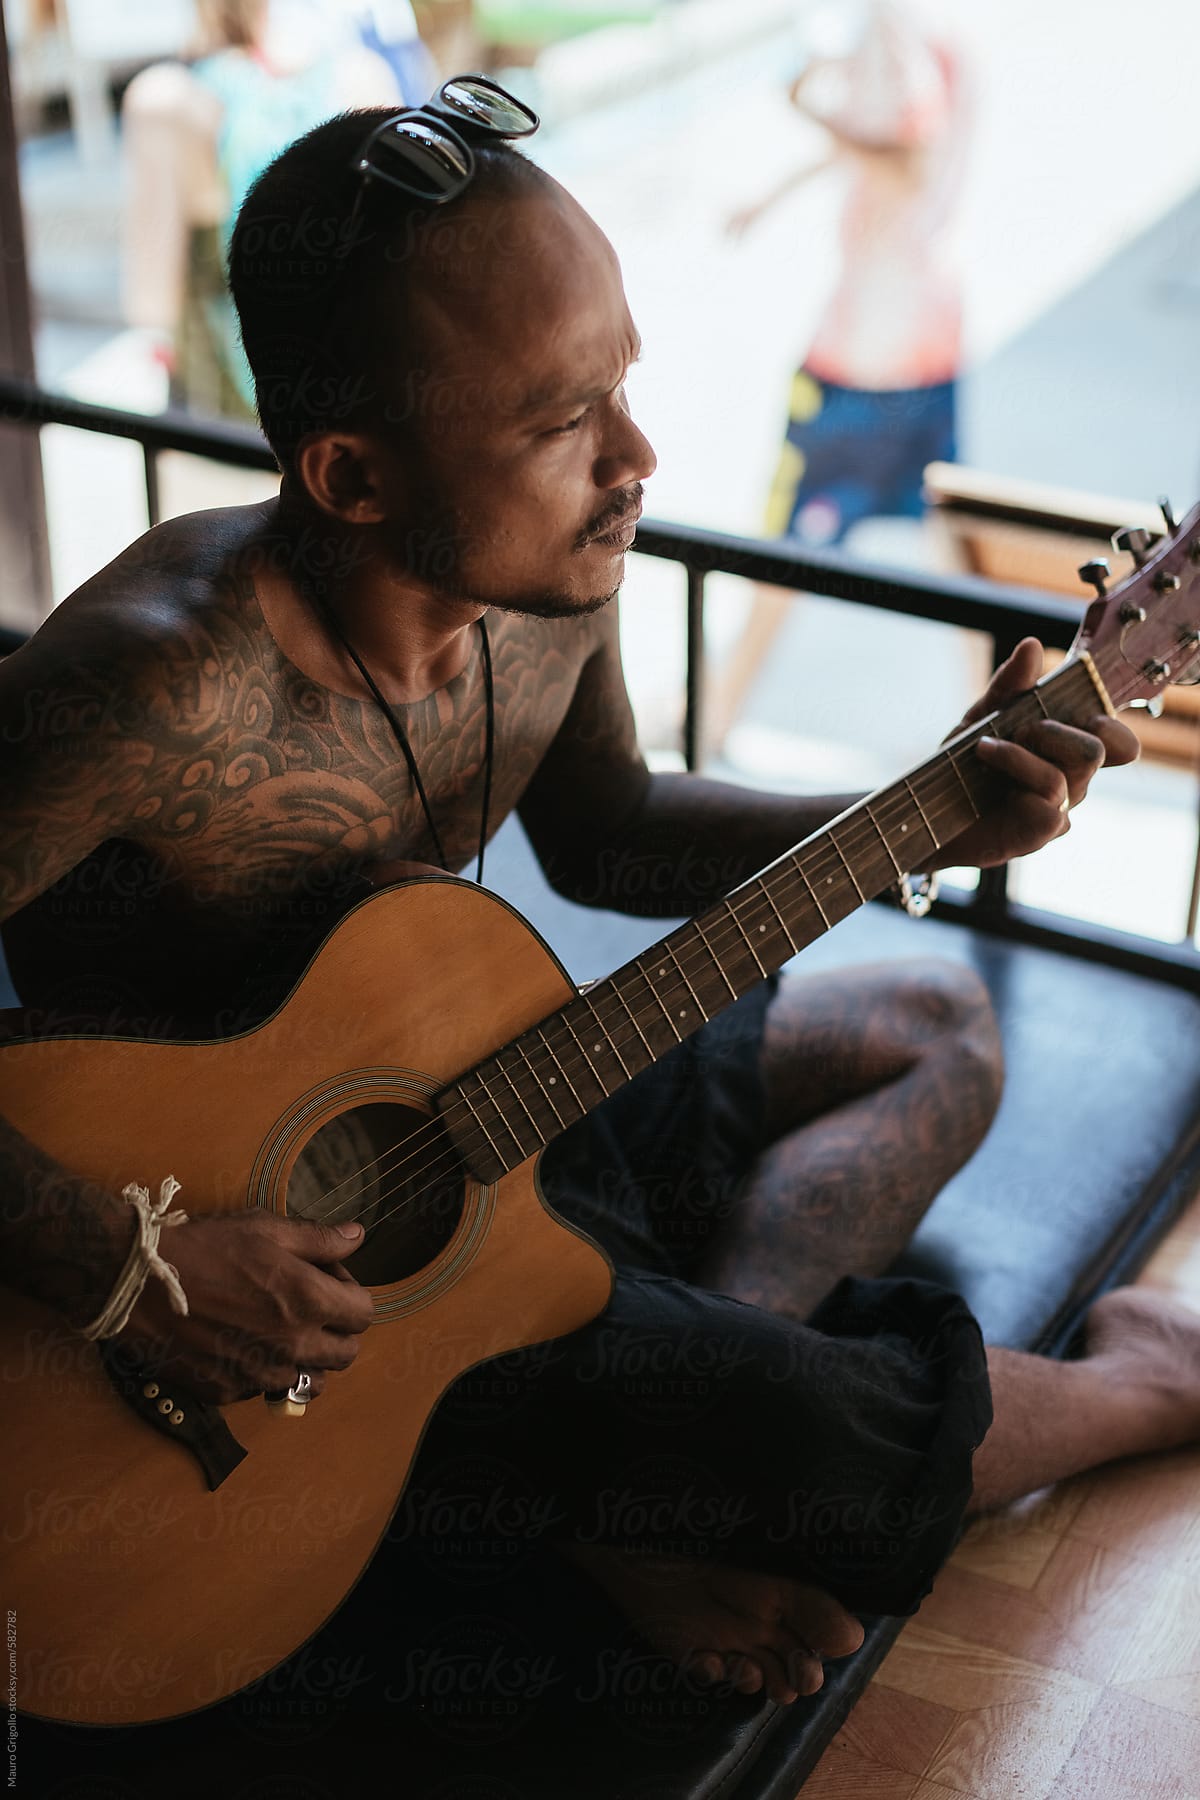 Thai tattoo artist playing guitar during a break.